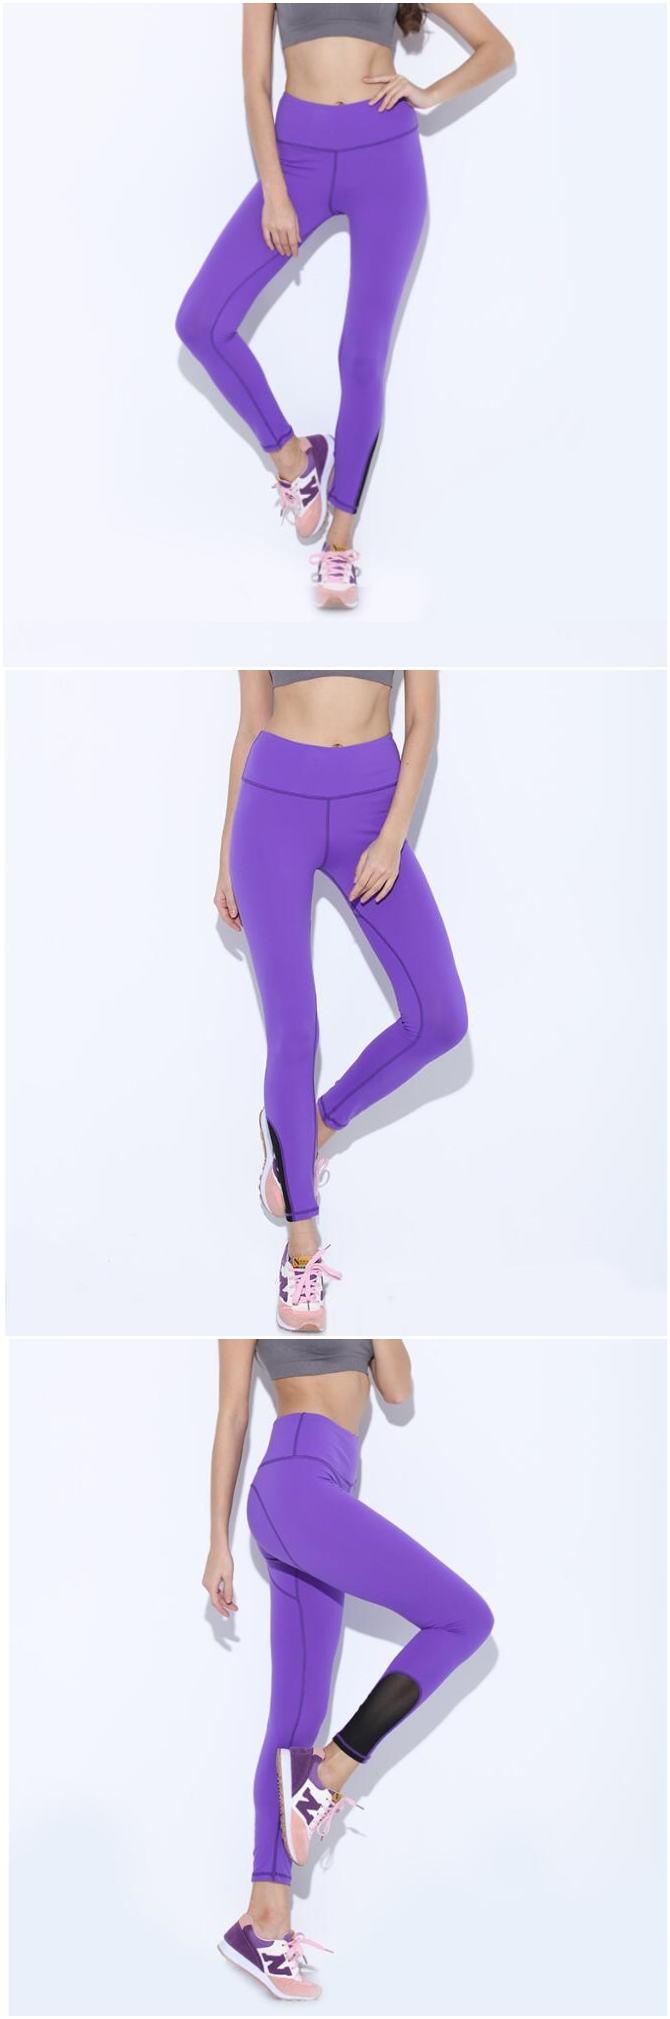 High-Waist-Women-Heart-Sport-Legging-Breathable-Quick-Dry-Elastic-Fitness-Running-Pants-1082690